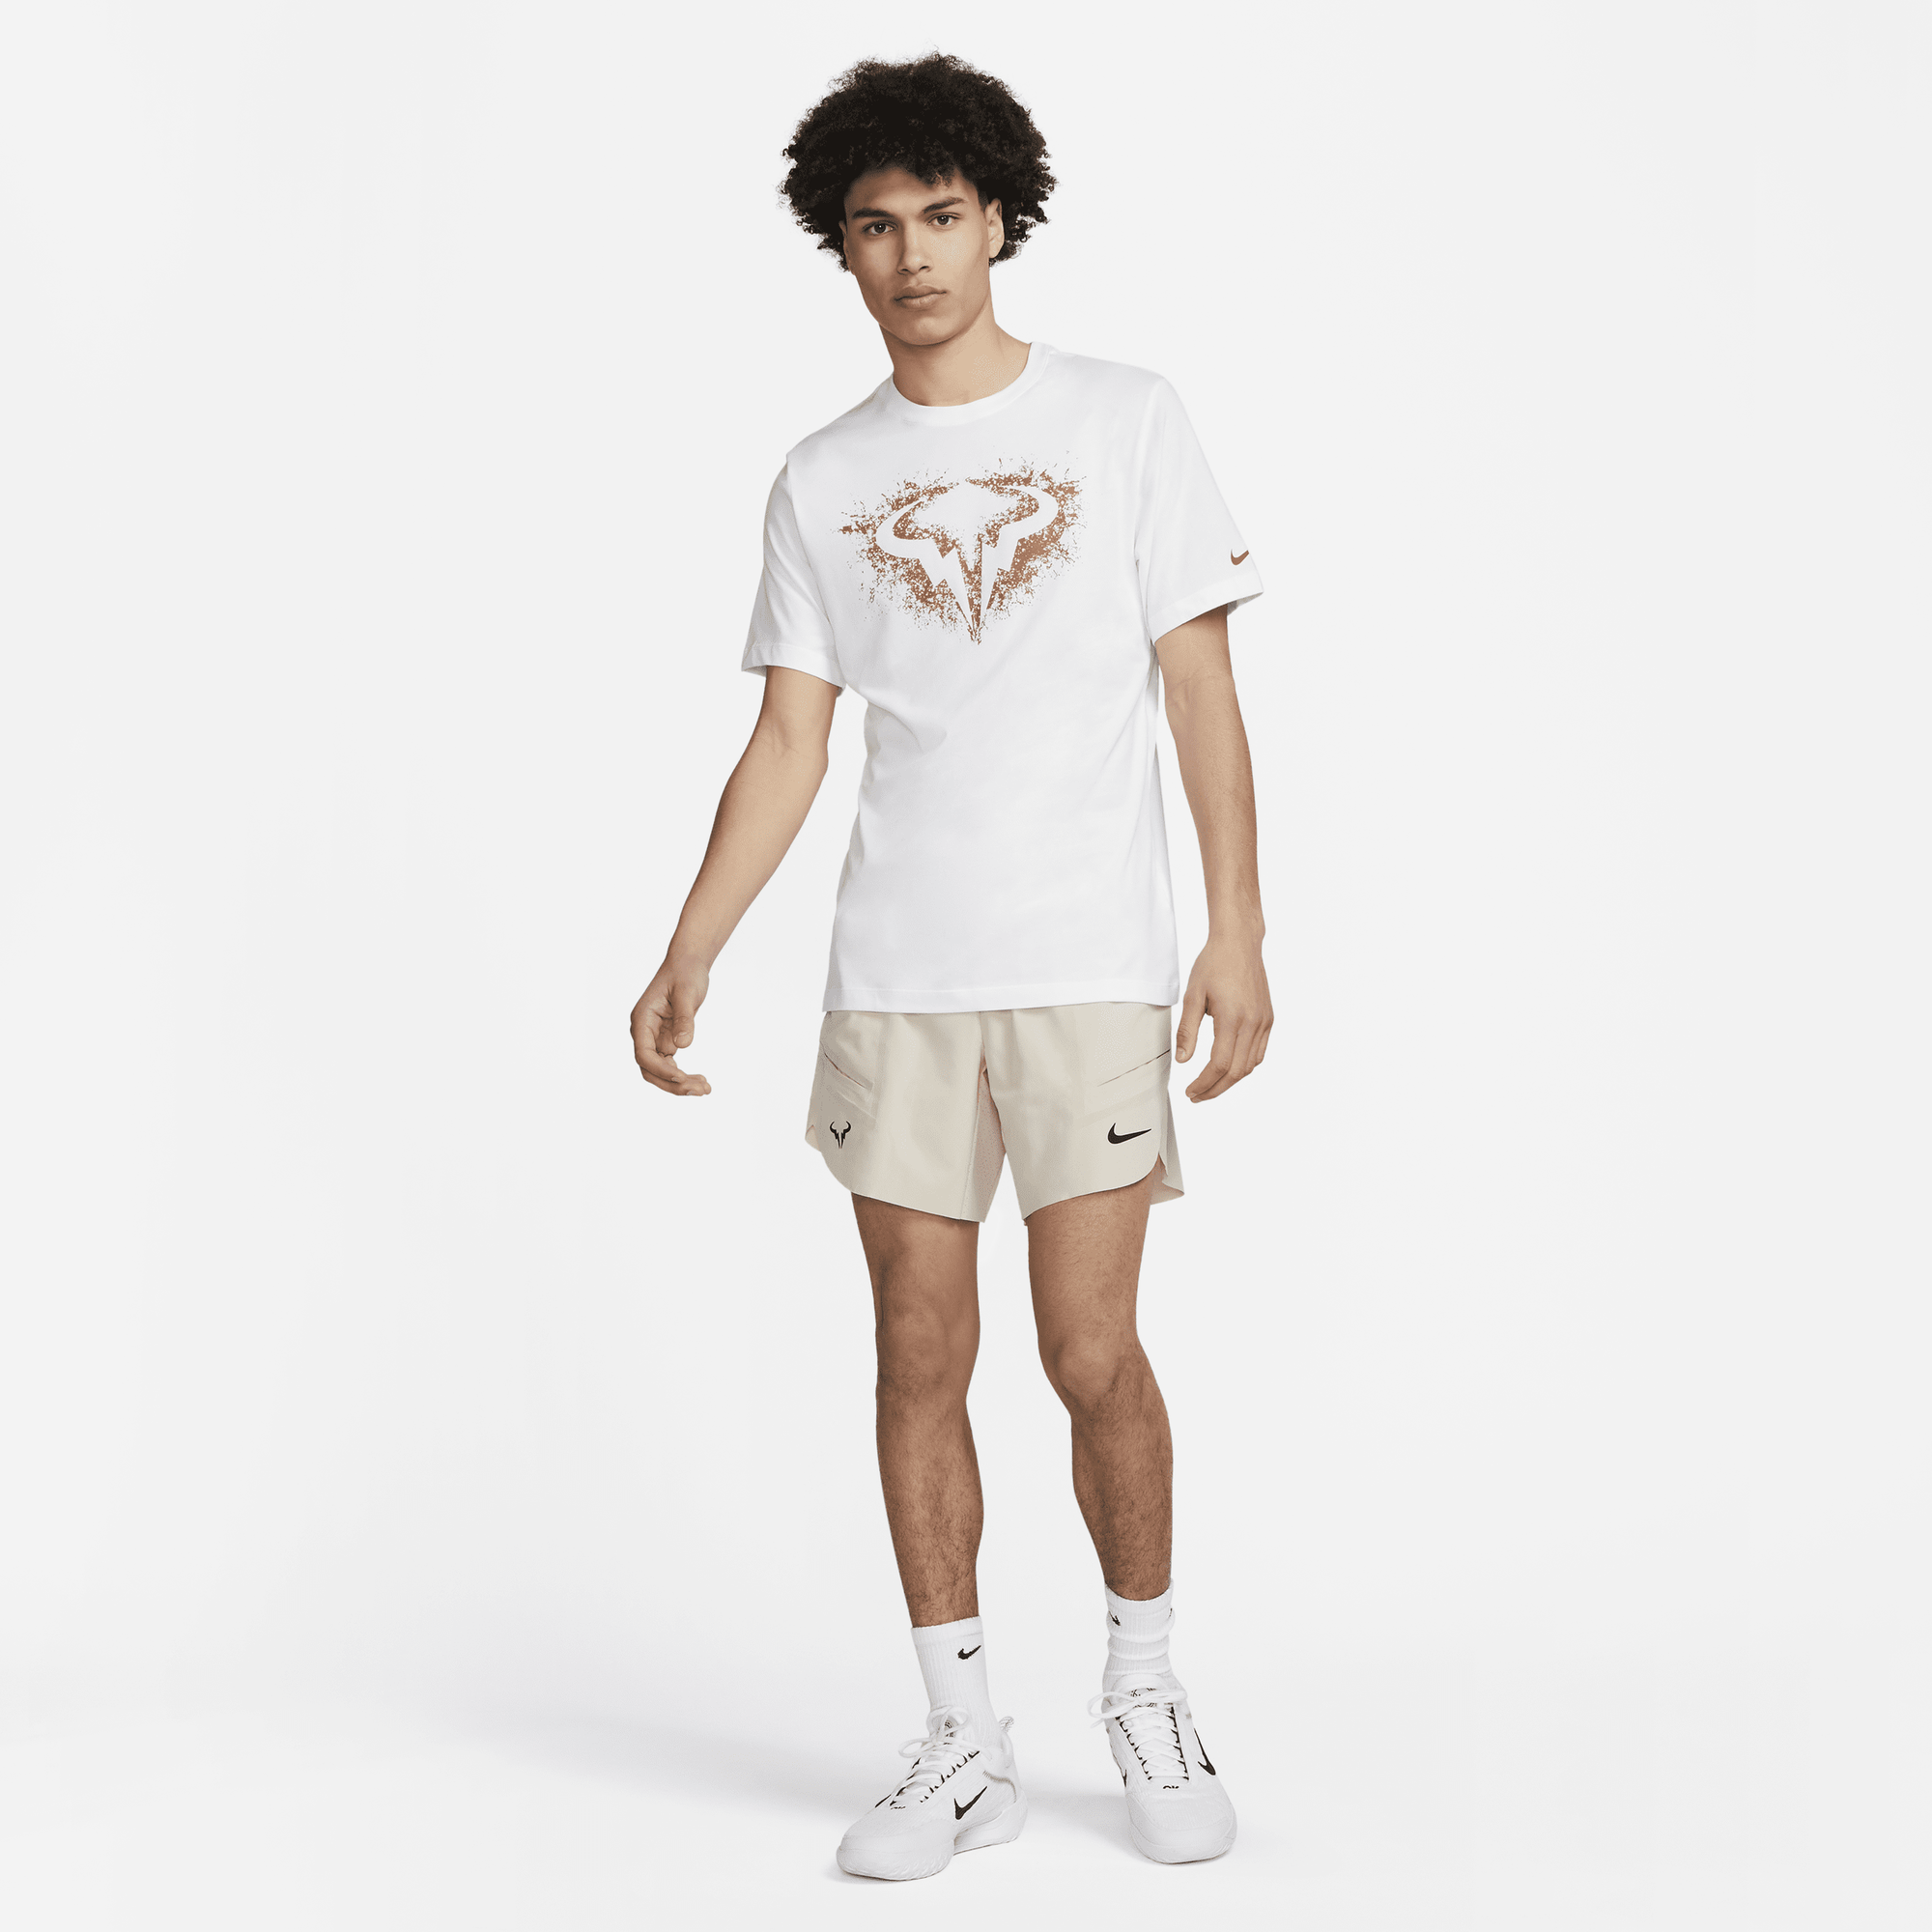 Shop Rafa Men's NikeCourt T-Shirt | Nike UAE